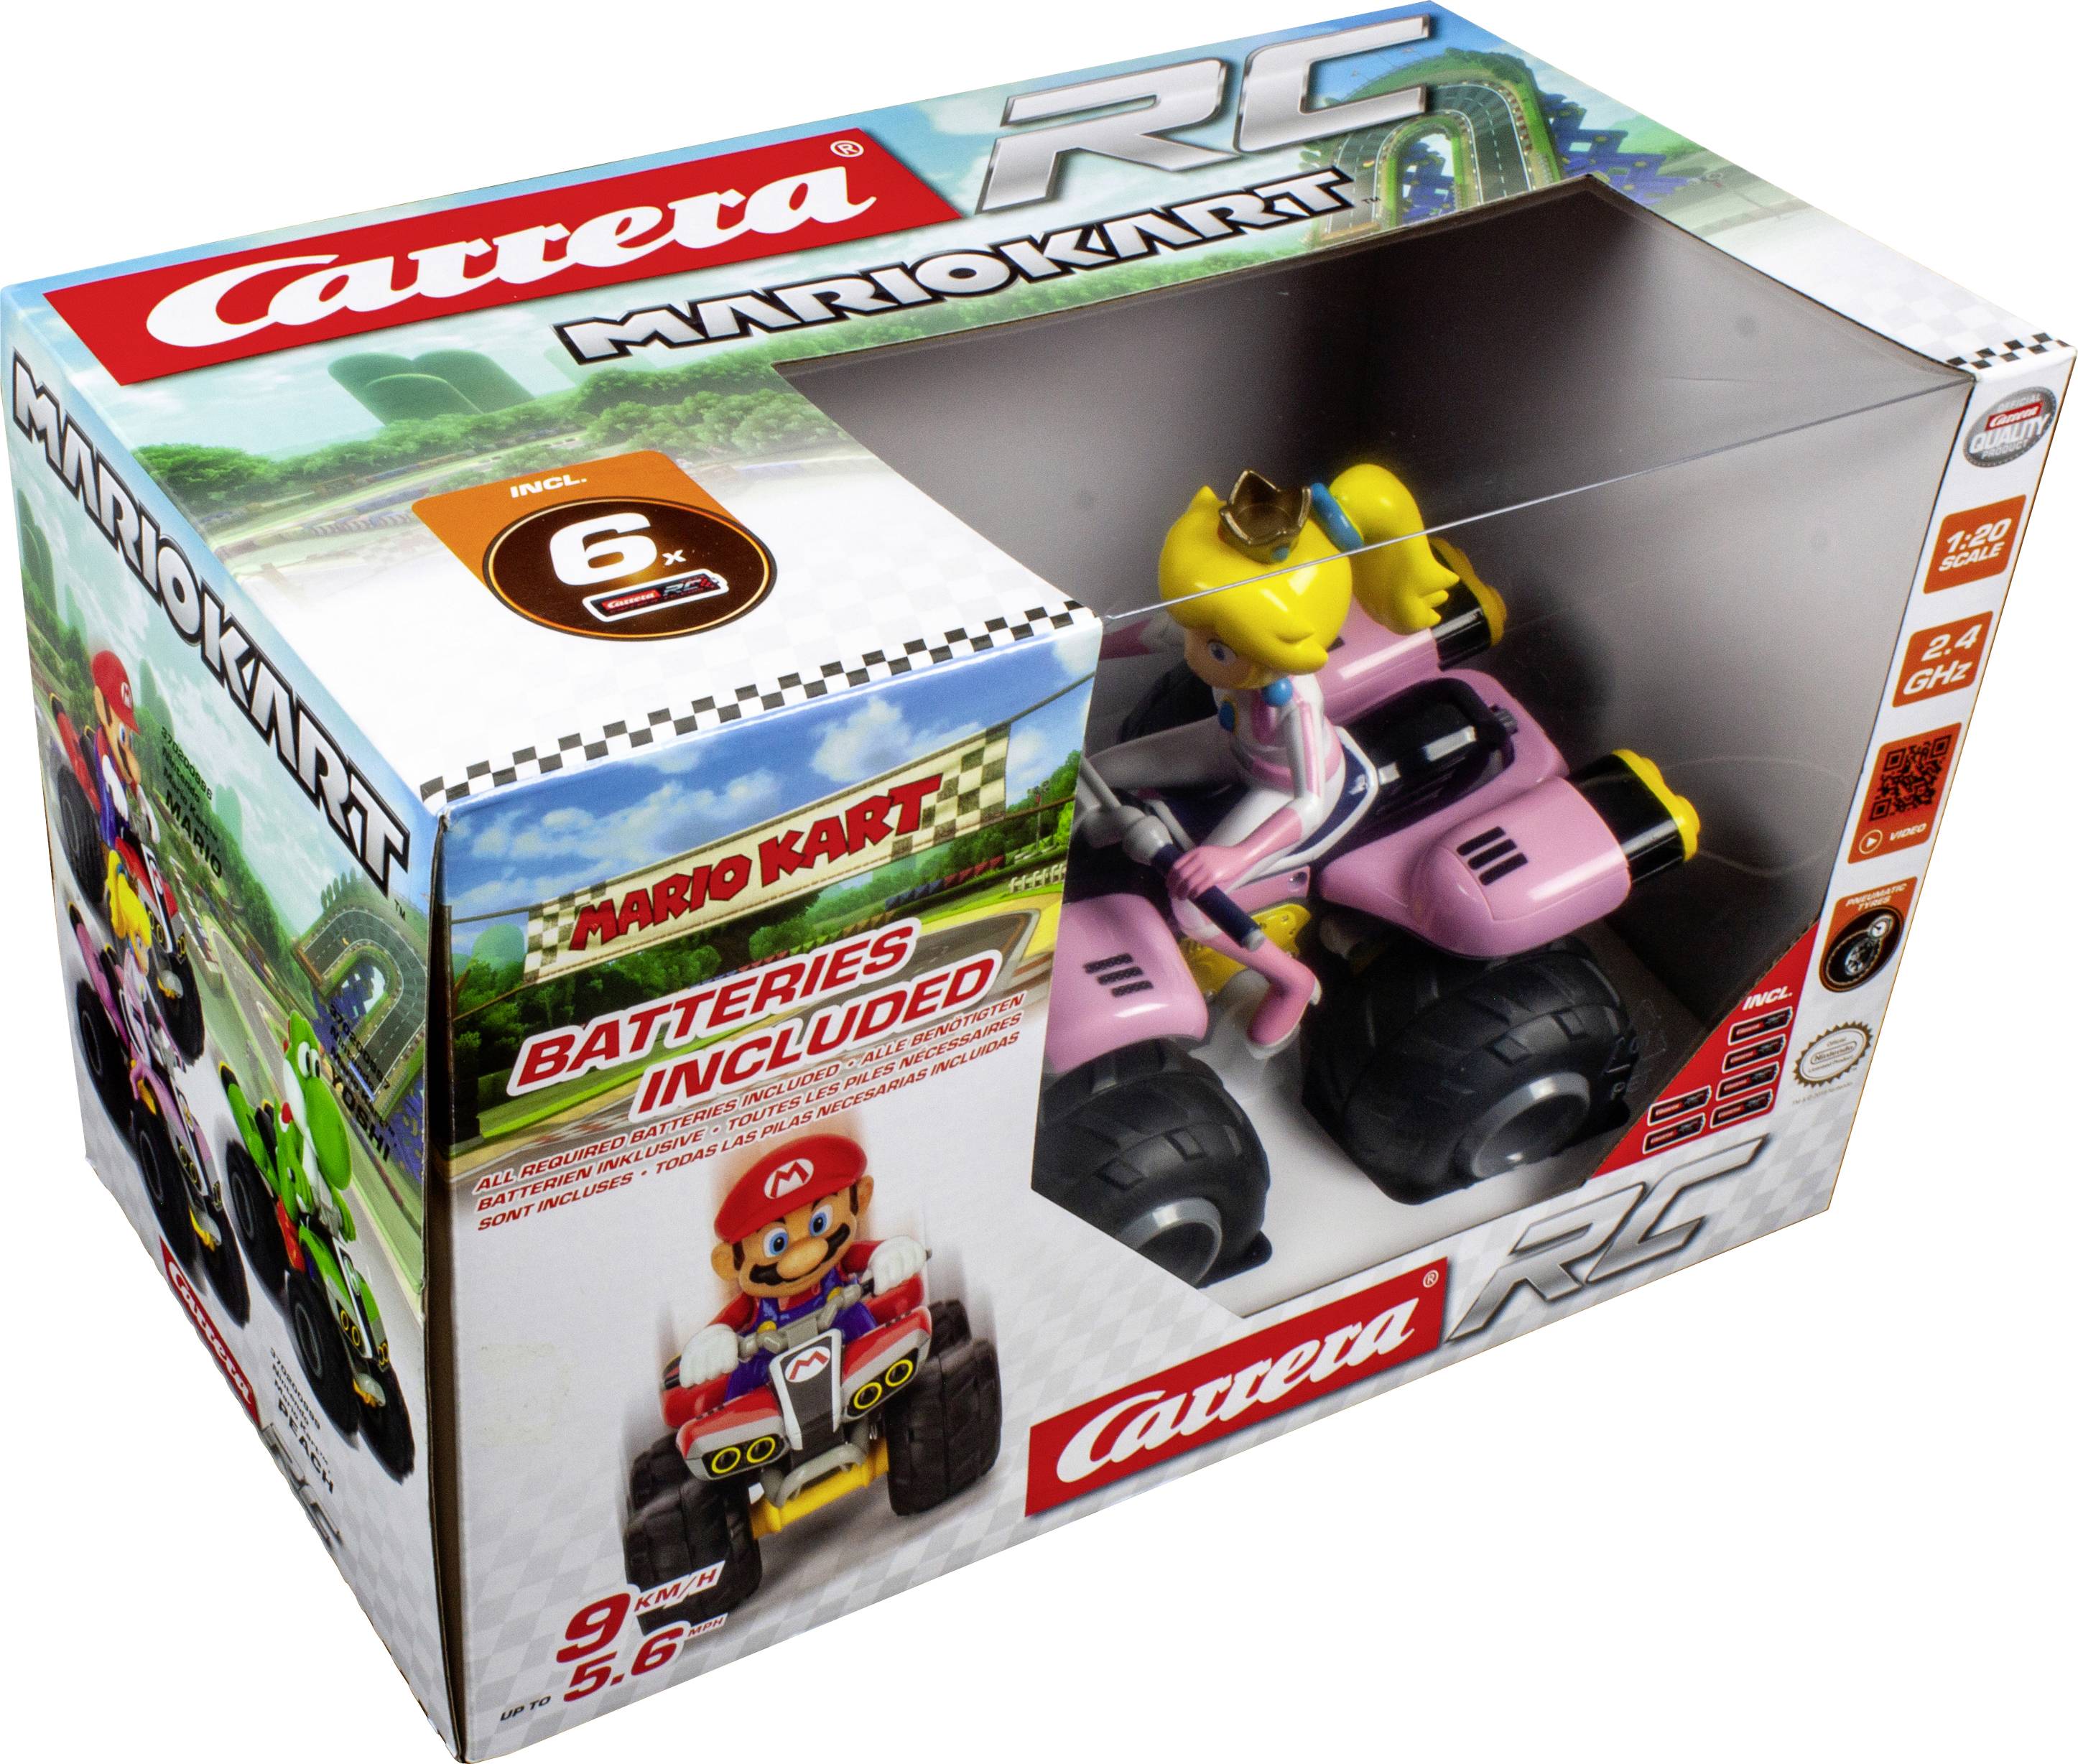 Carrera 370200999x Mario Kart Peach Quad 120 Rc Modelauto Voor Beginners Conradnl 0239